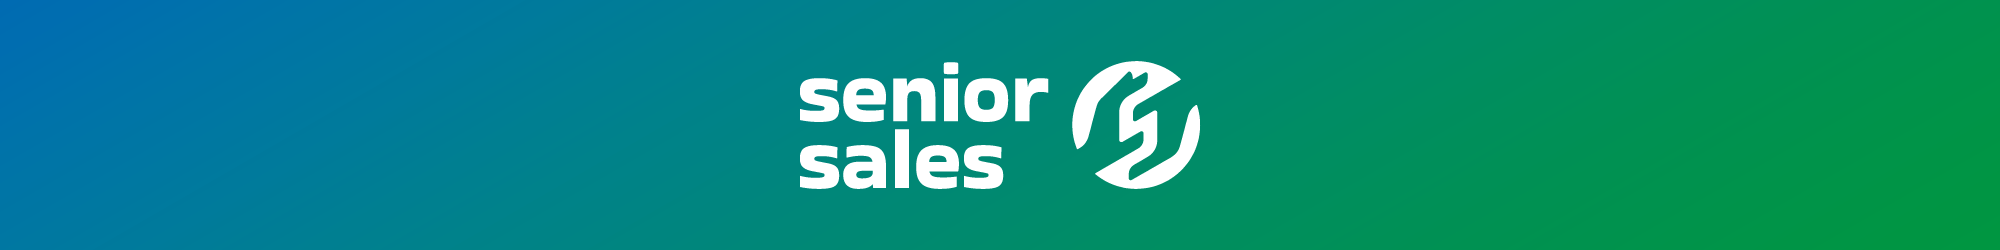 Senior-Sales-Header